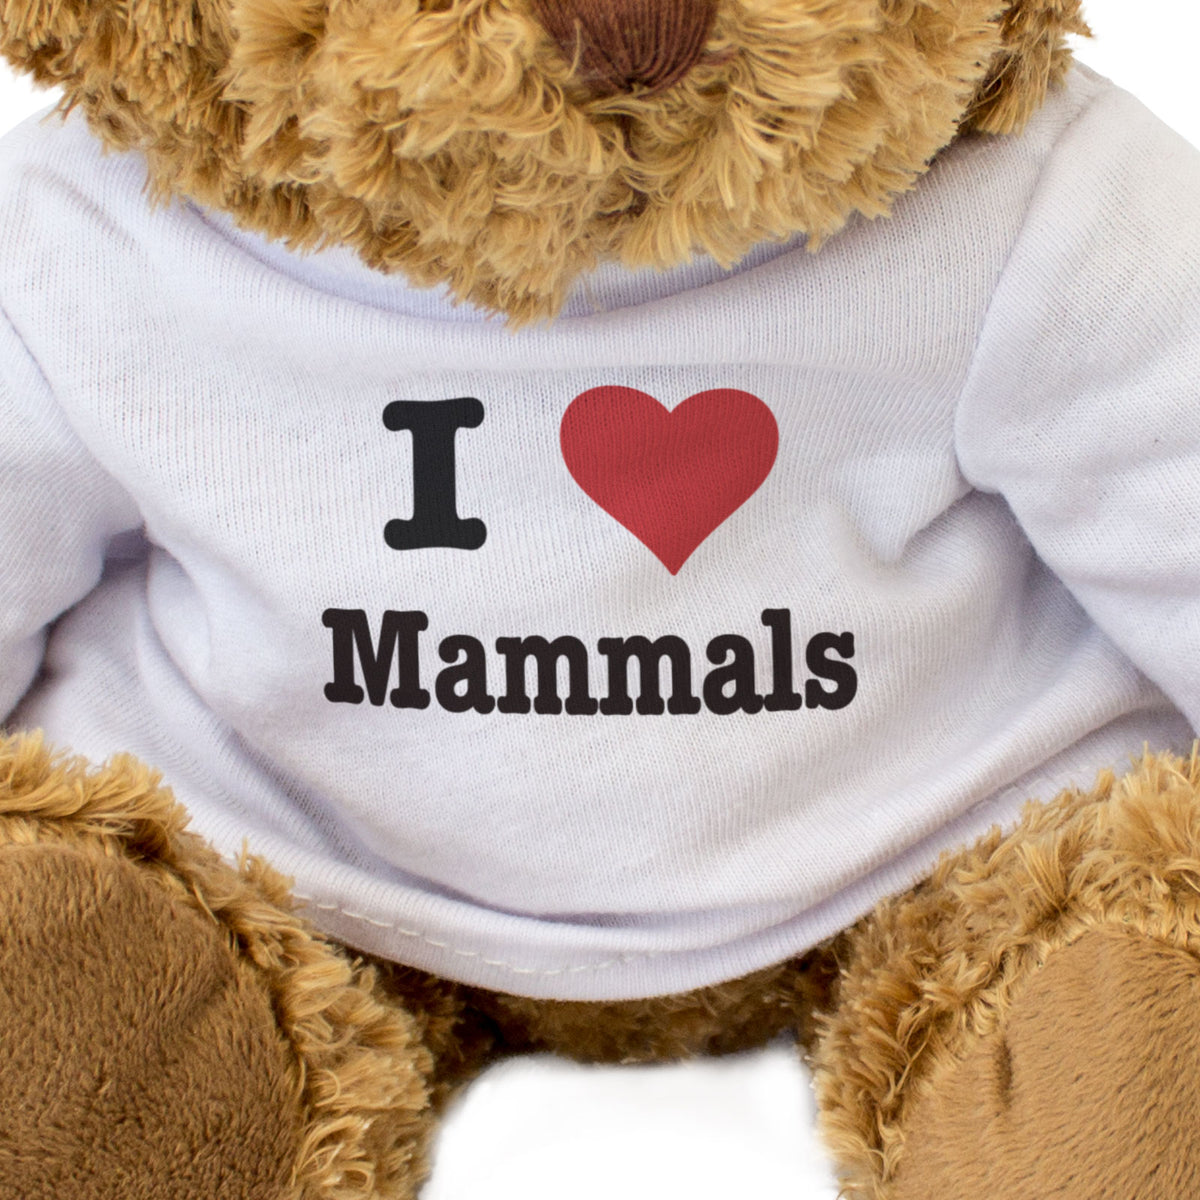 I Love Mammals - Teddy Bear